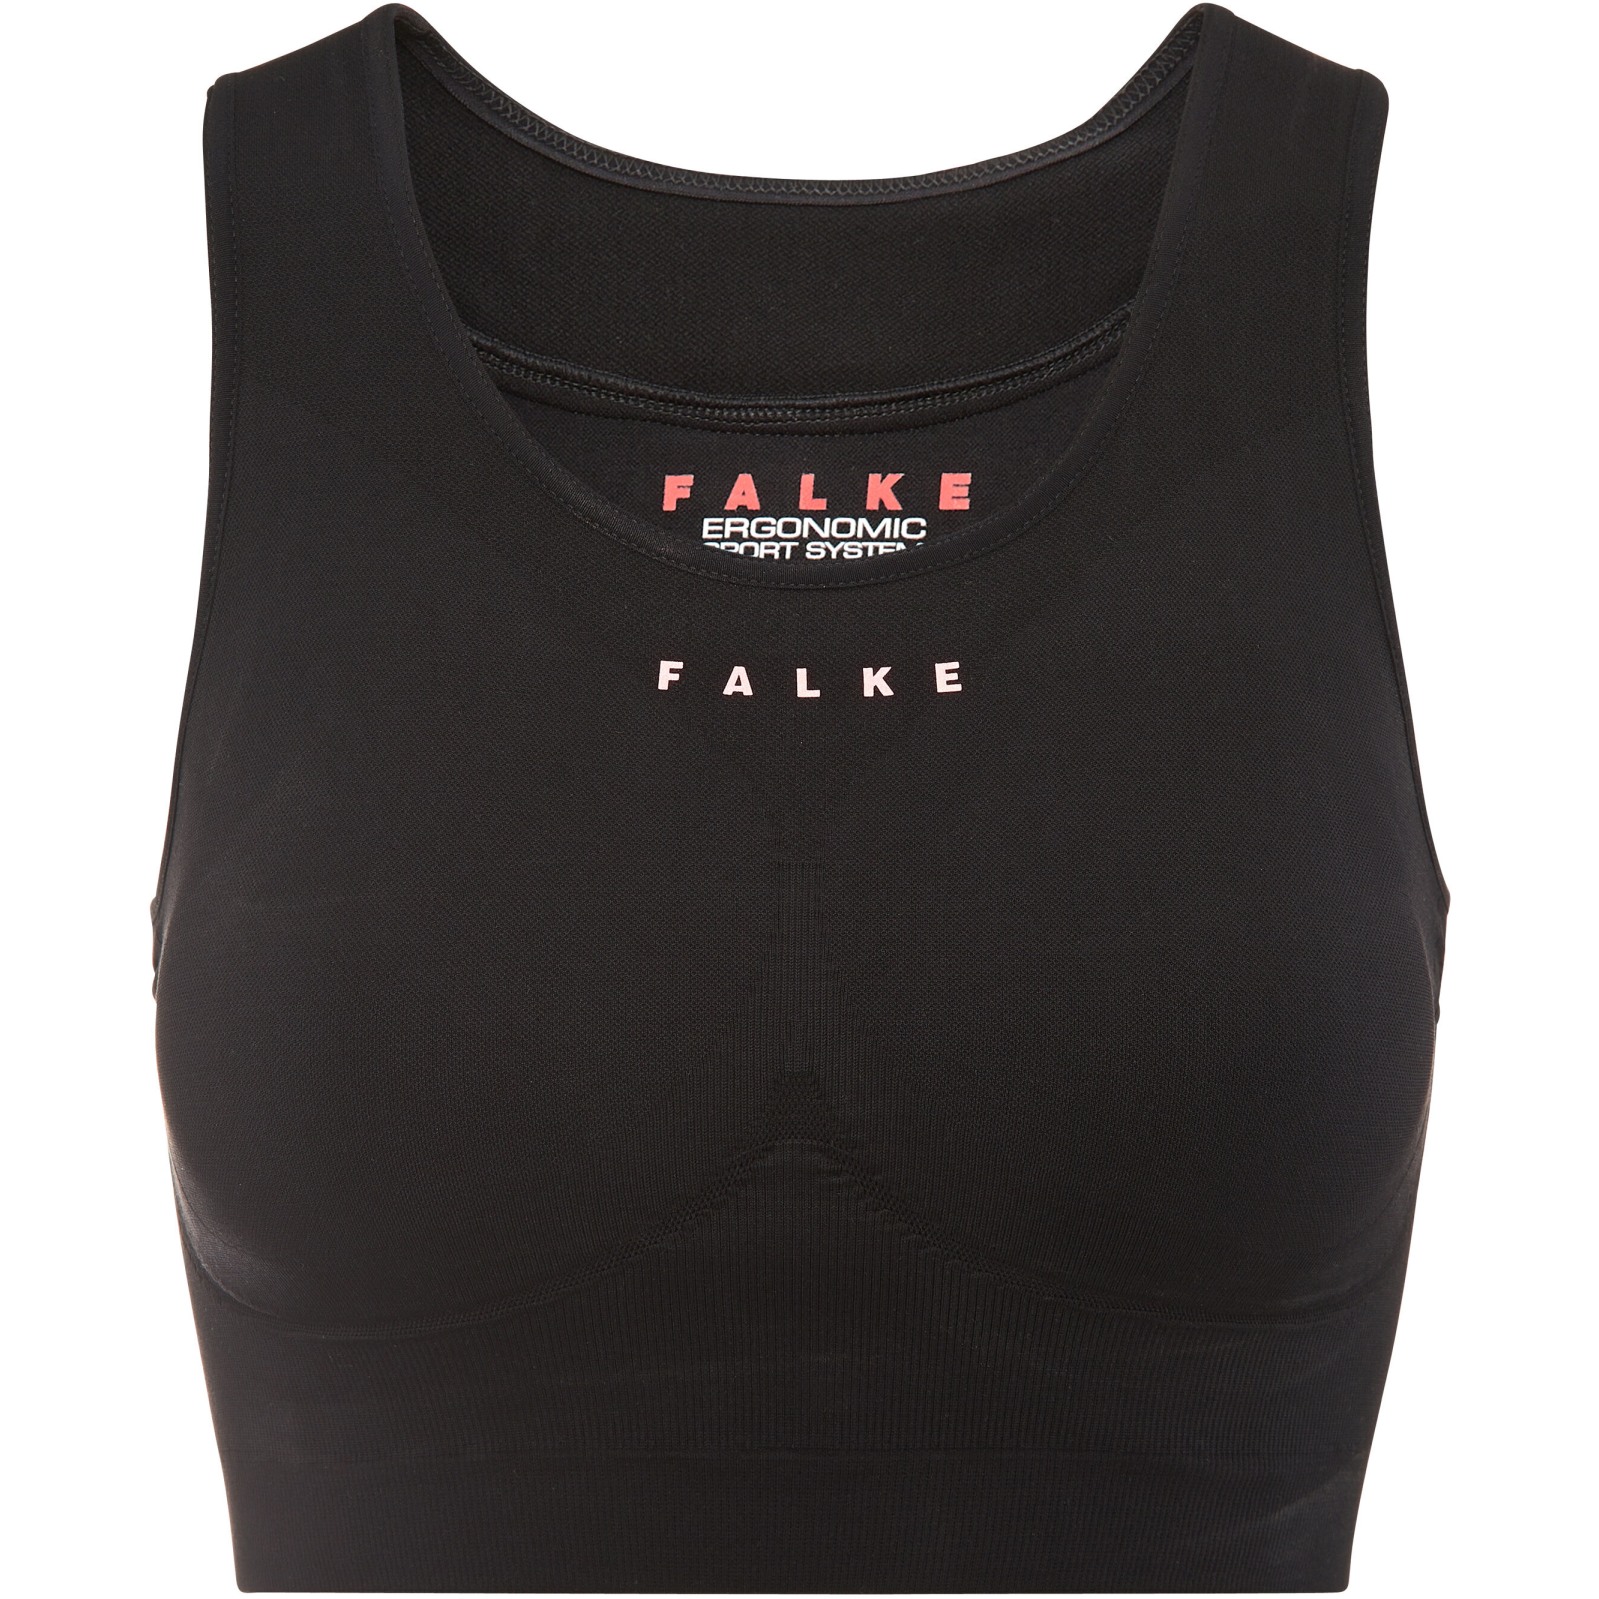 Productfoto van Falke RU Sport-BH Dames - zwart 3000